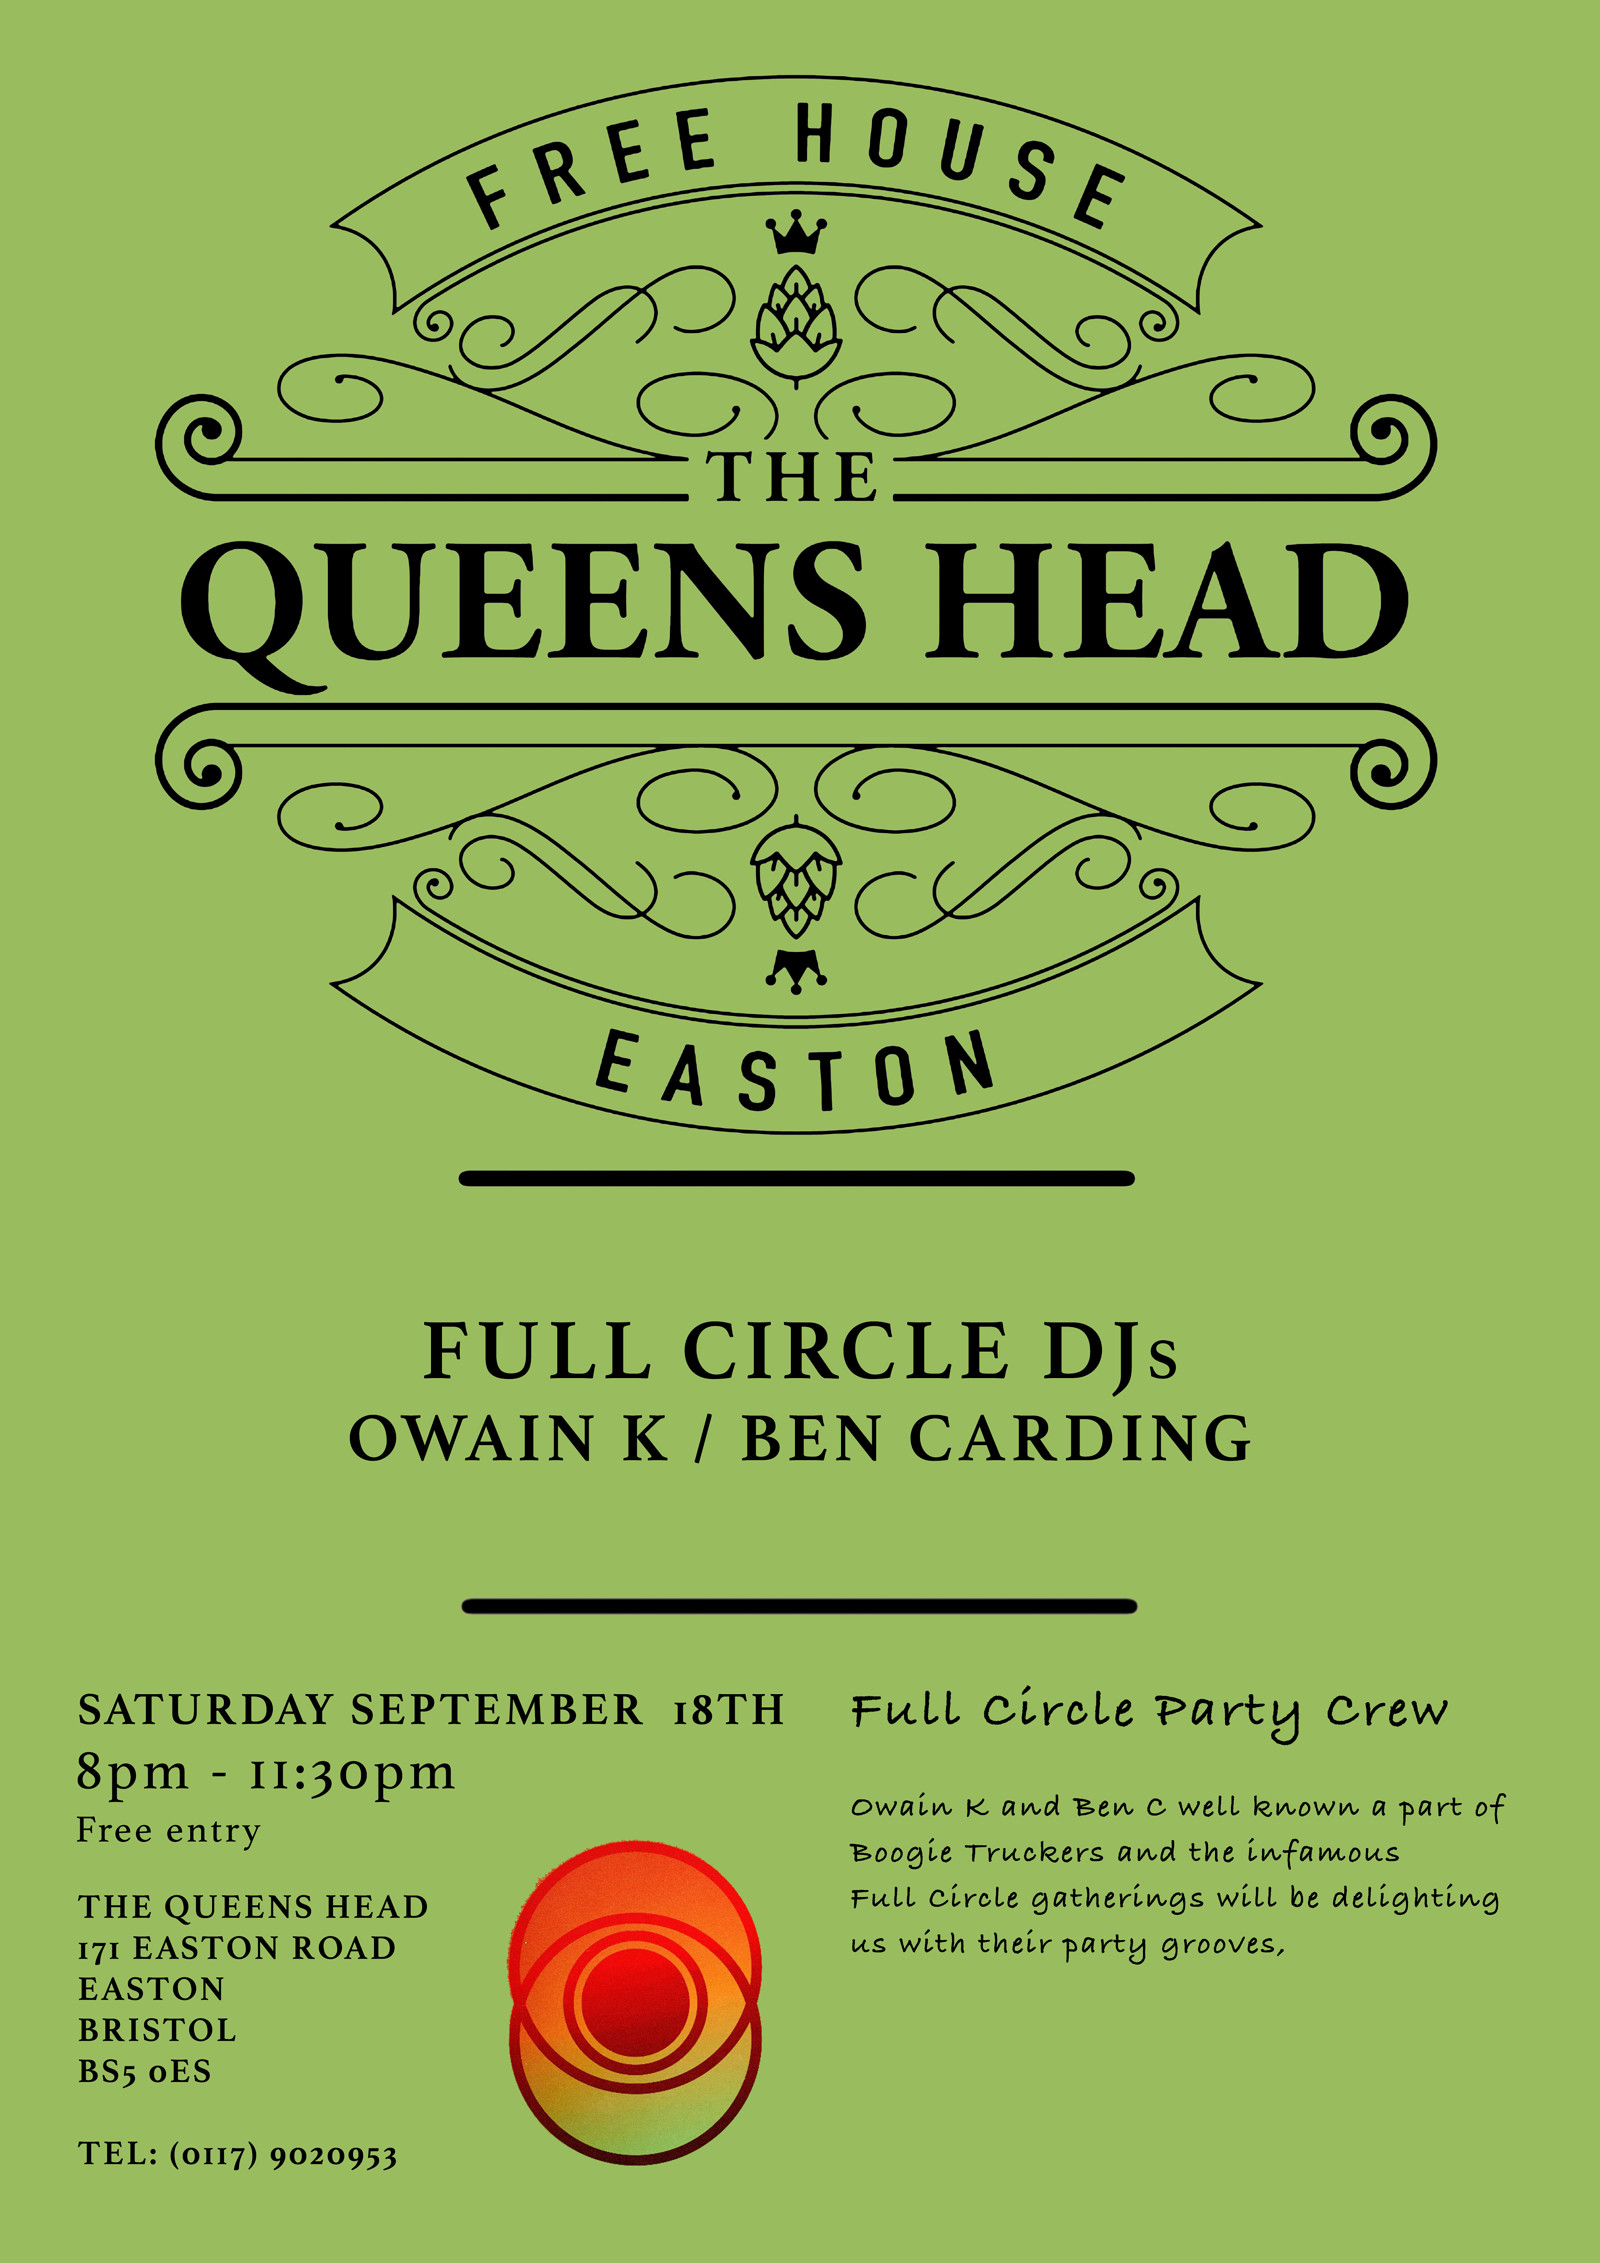 Full Circle DJs - Owain K and Ben C at Queens Head Easton